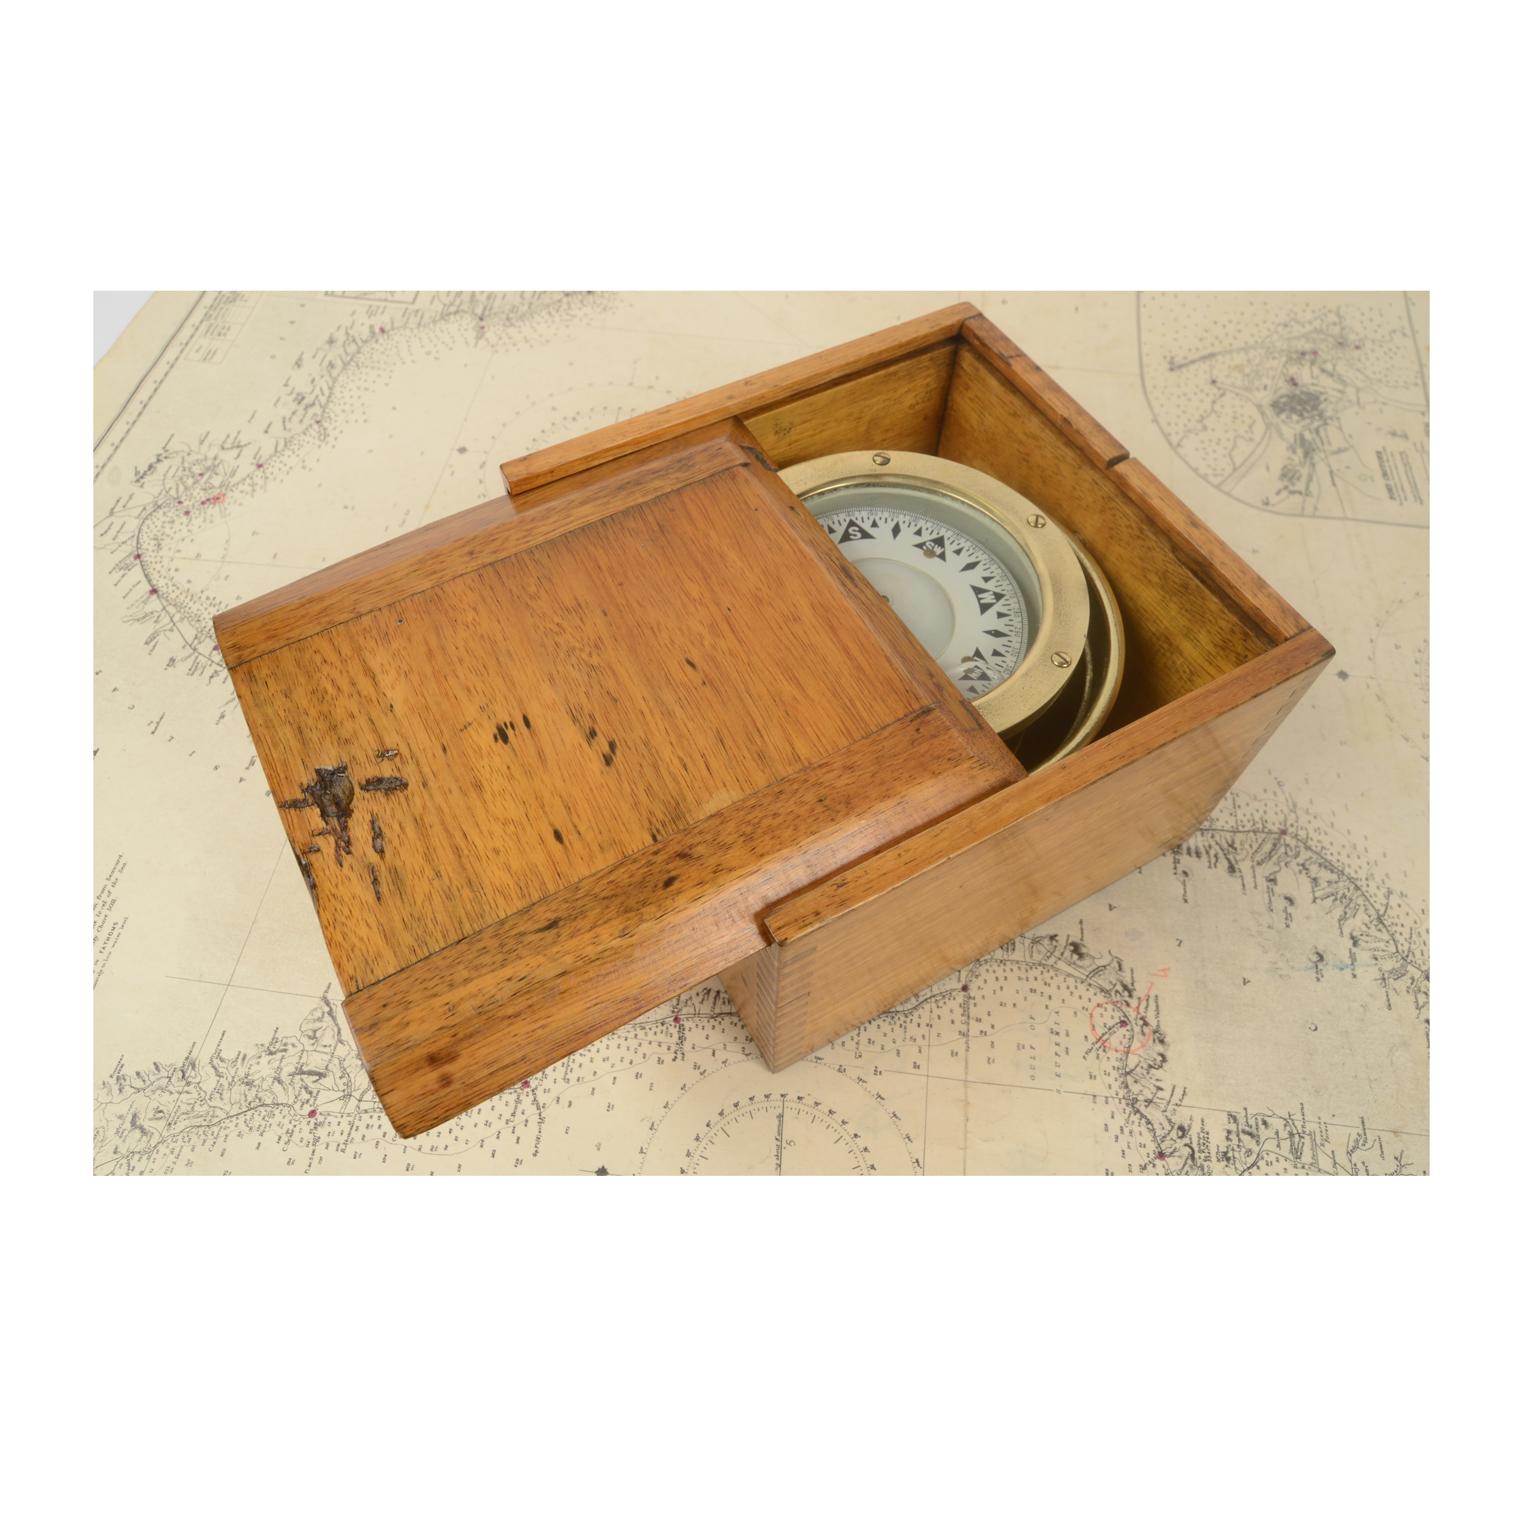 British 1900s Sestrel  Antique Nautical Magnetic Compass in its Original Wooden Box   